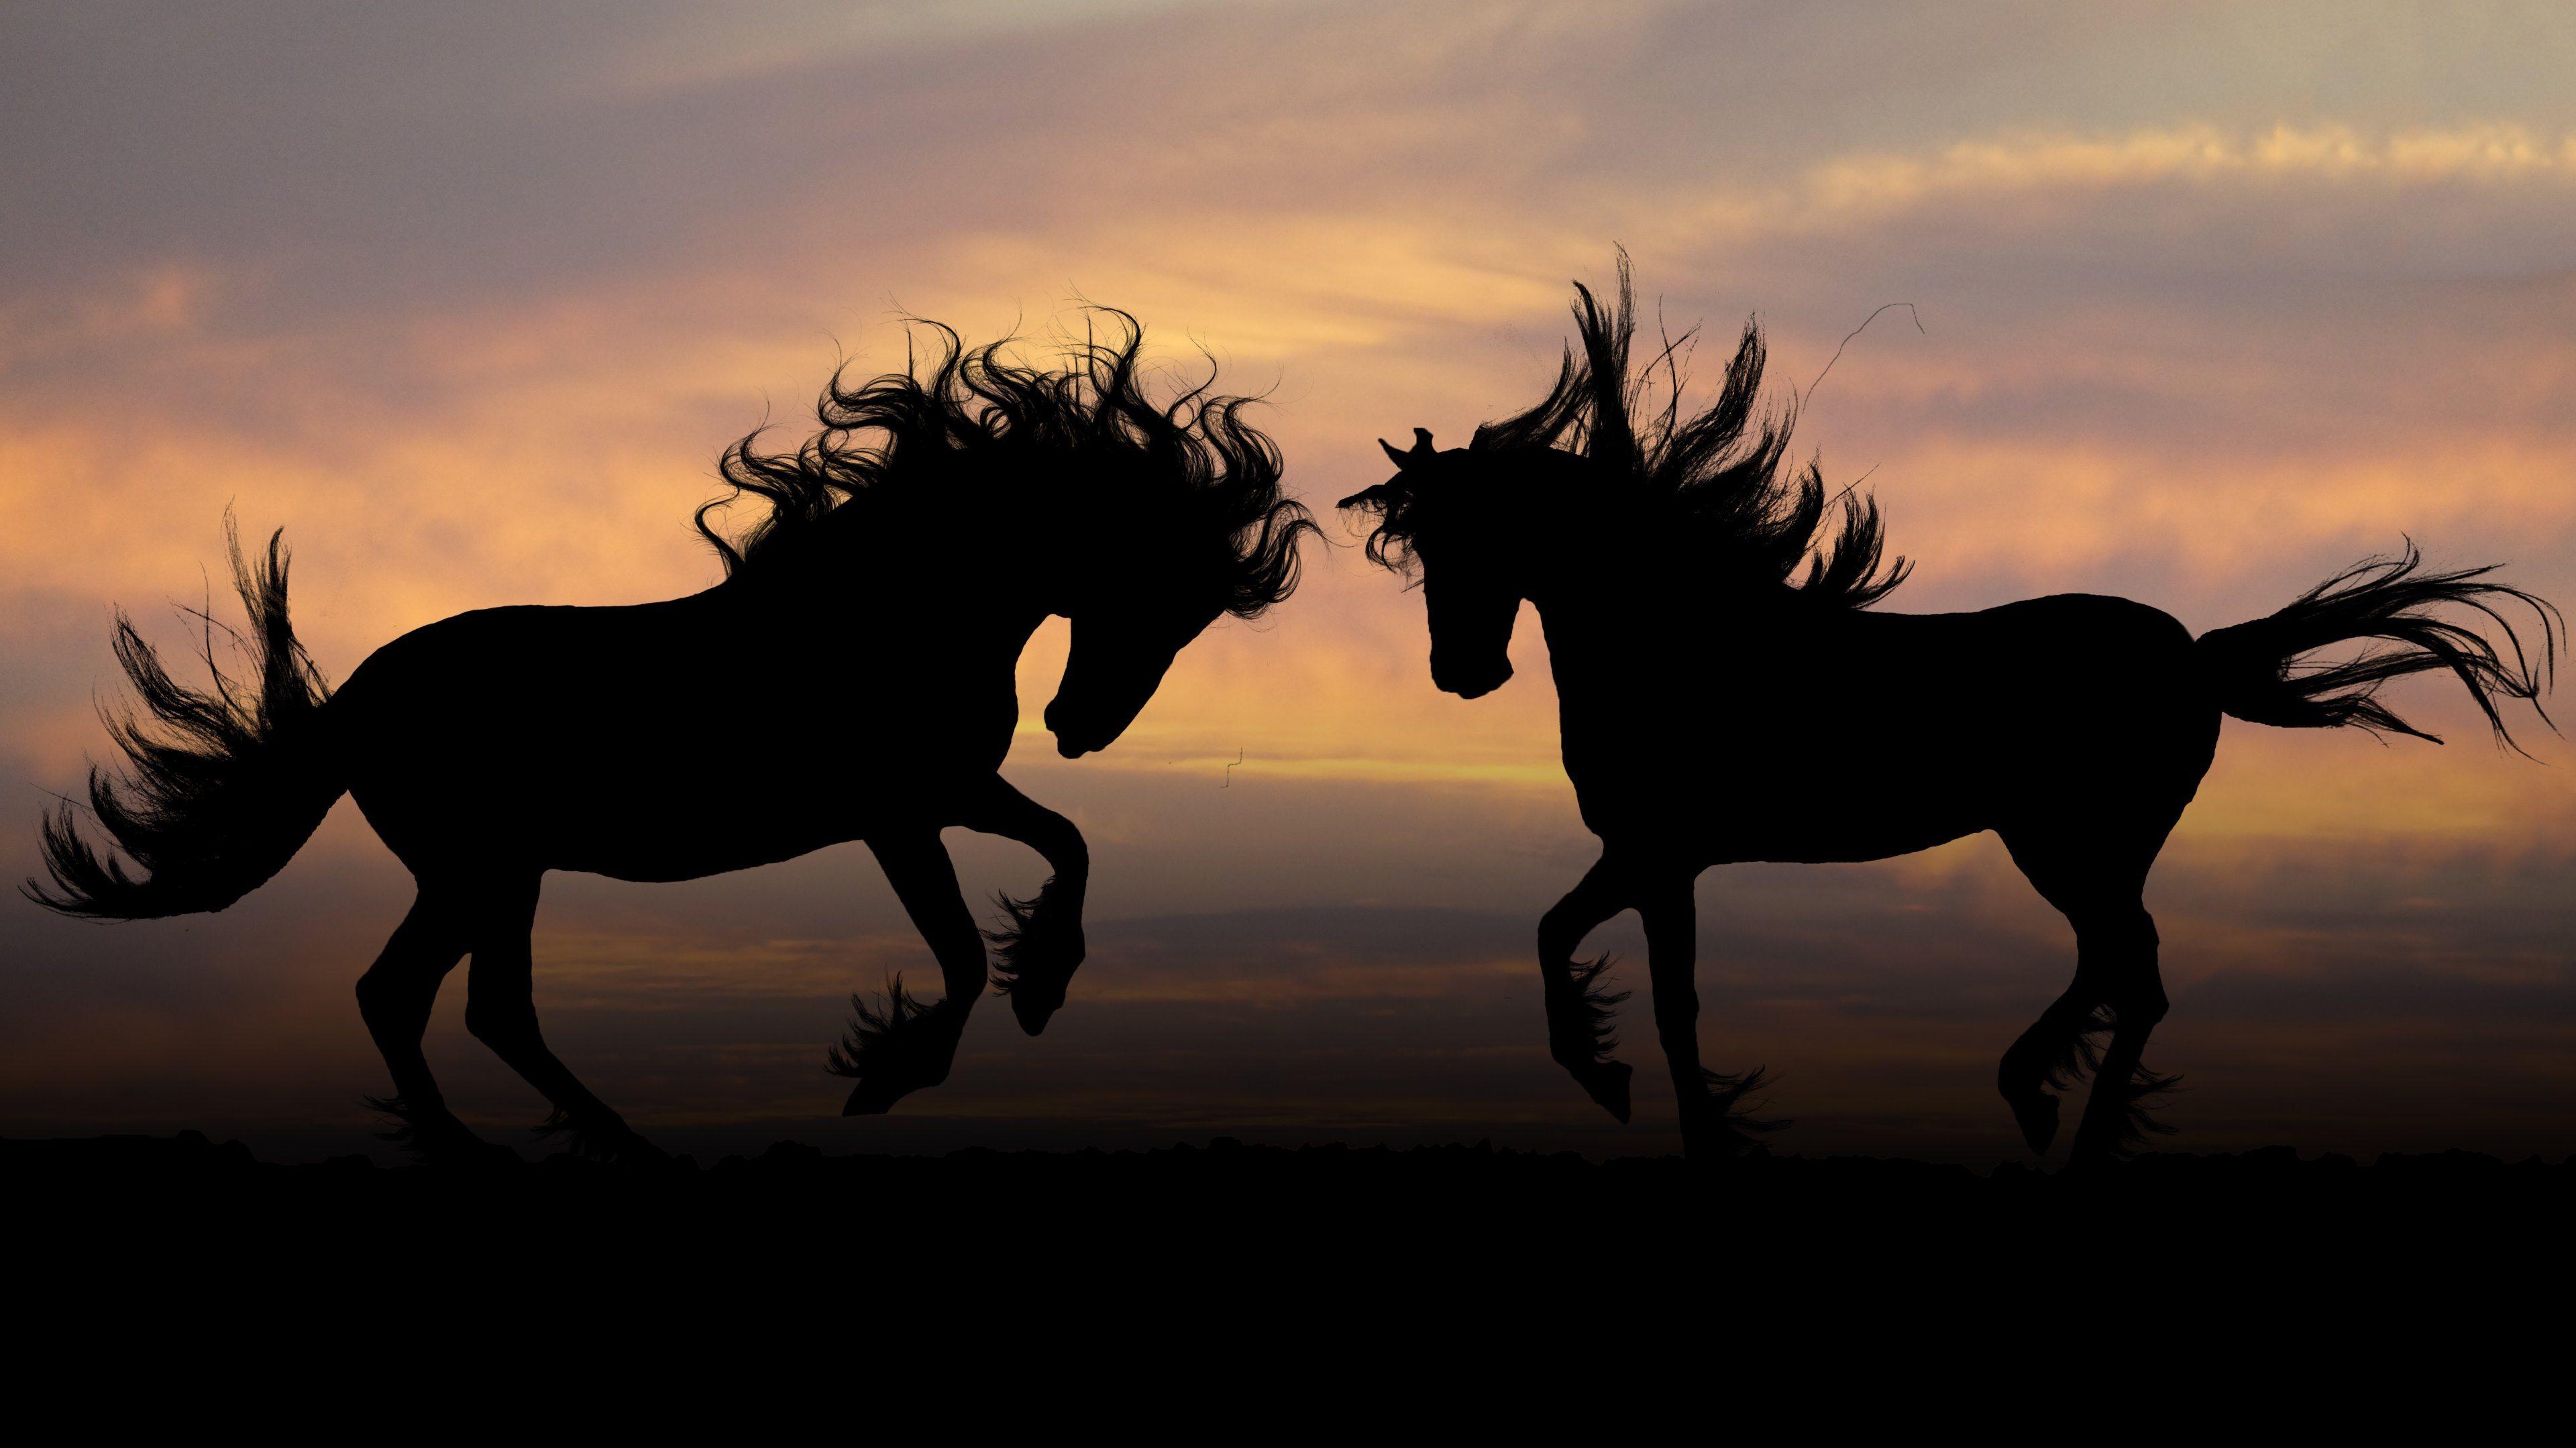 Horse Silhouettes   Animals Birds   FineWallpapersEu Horses